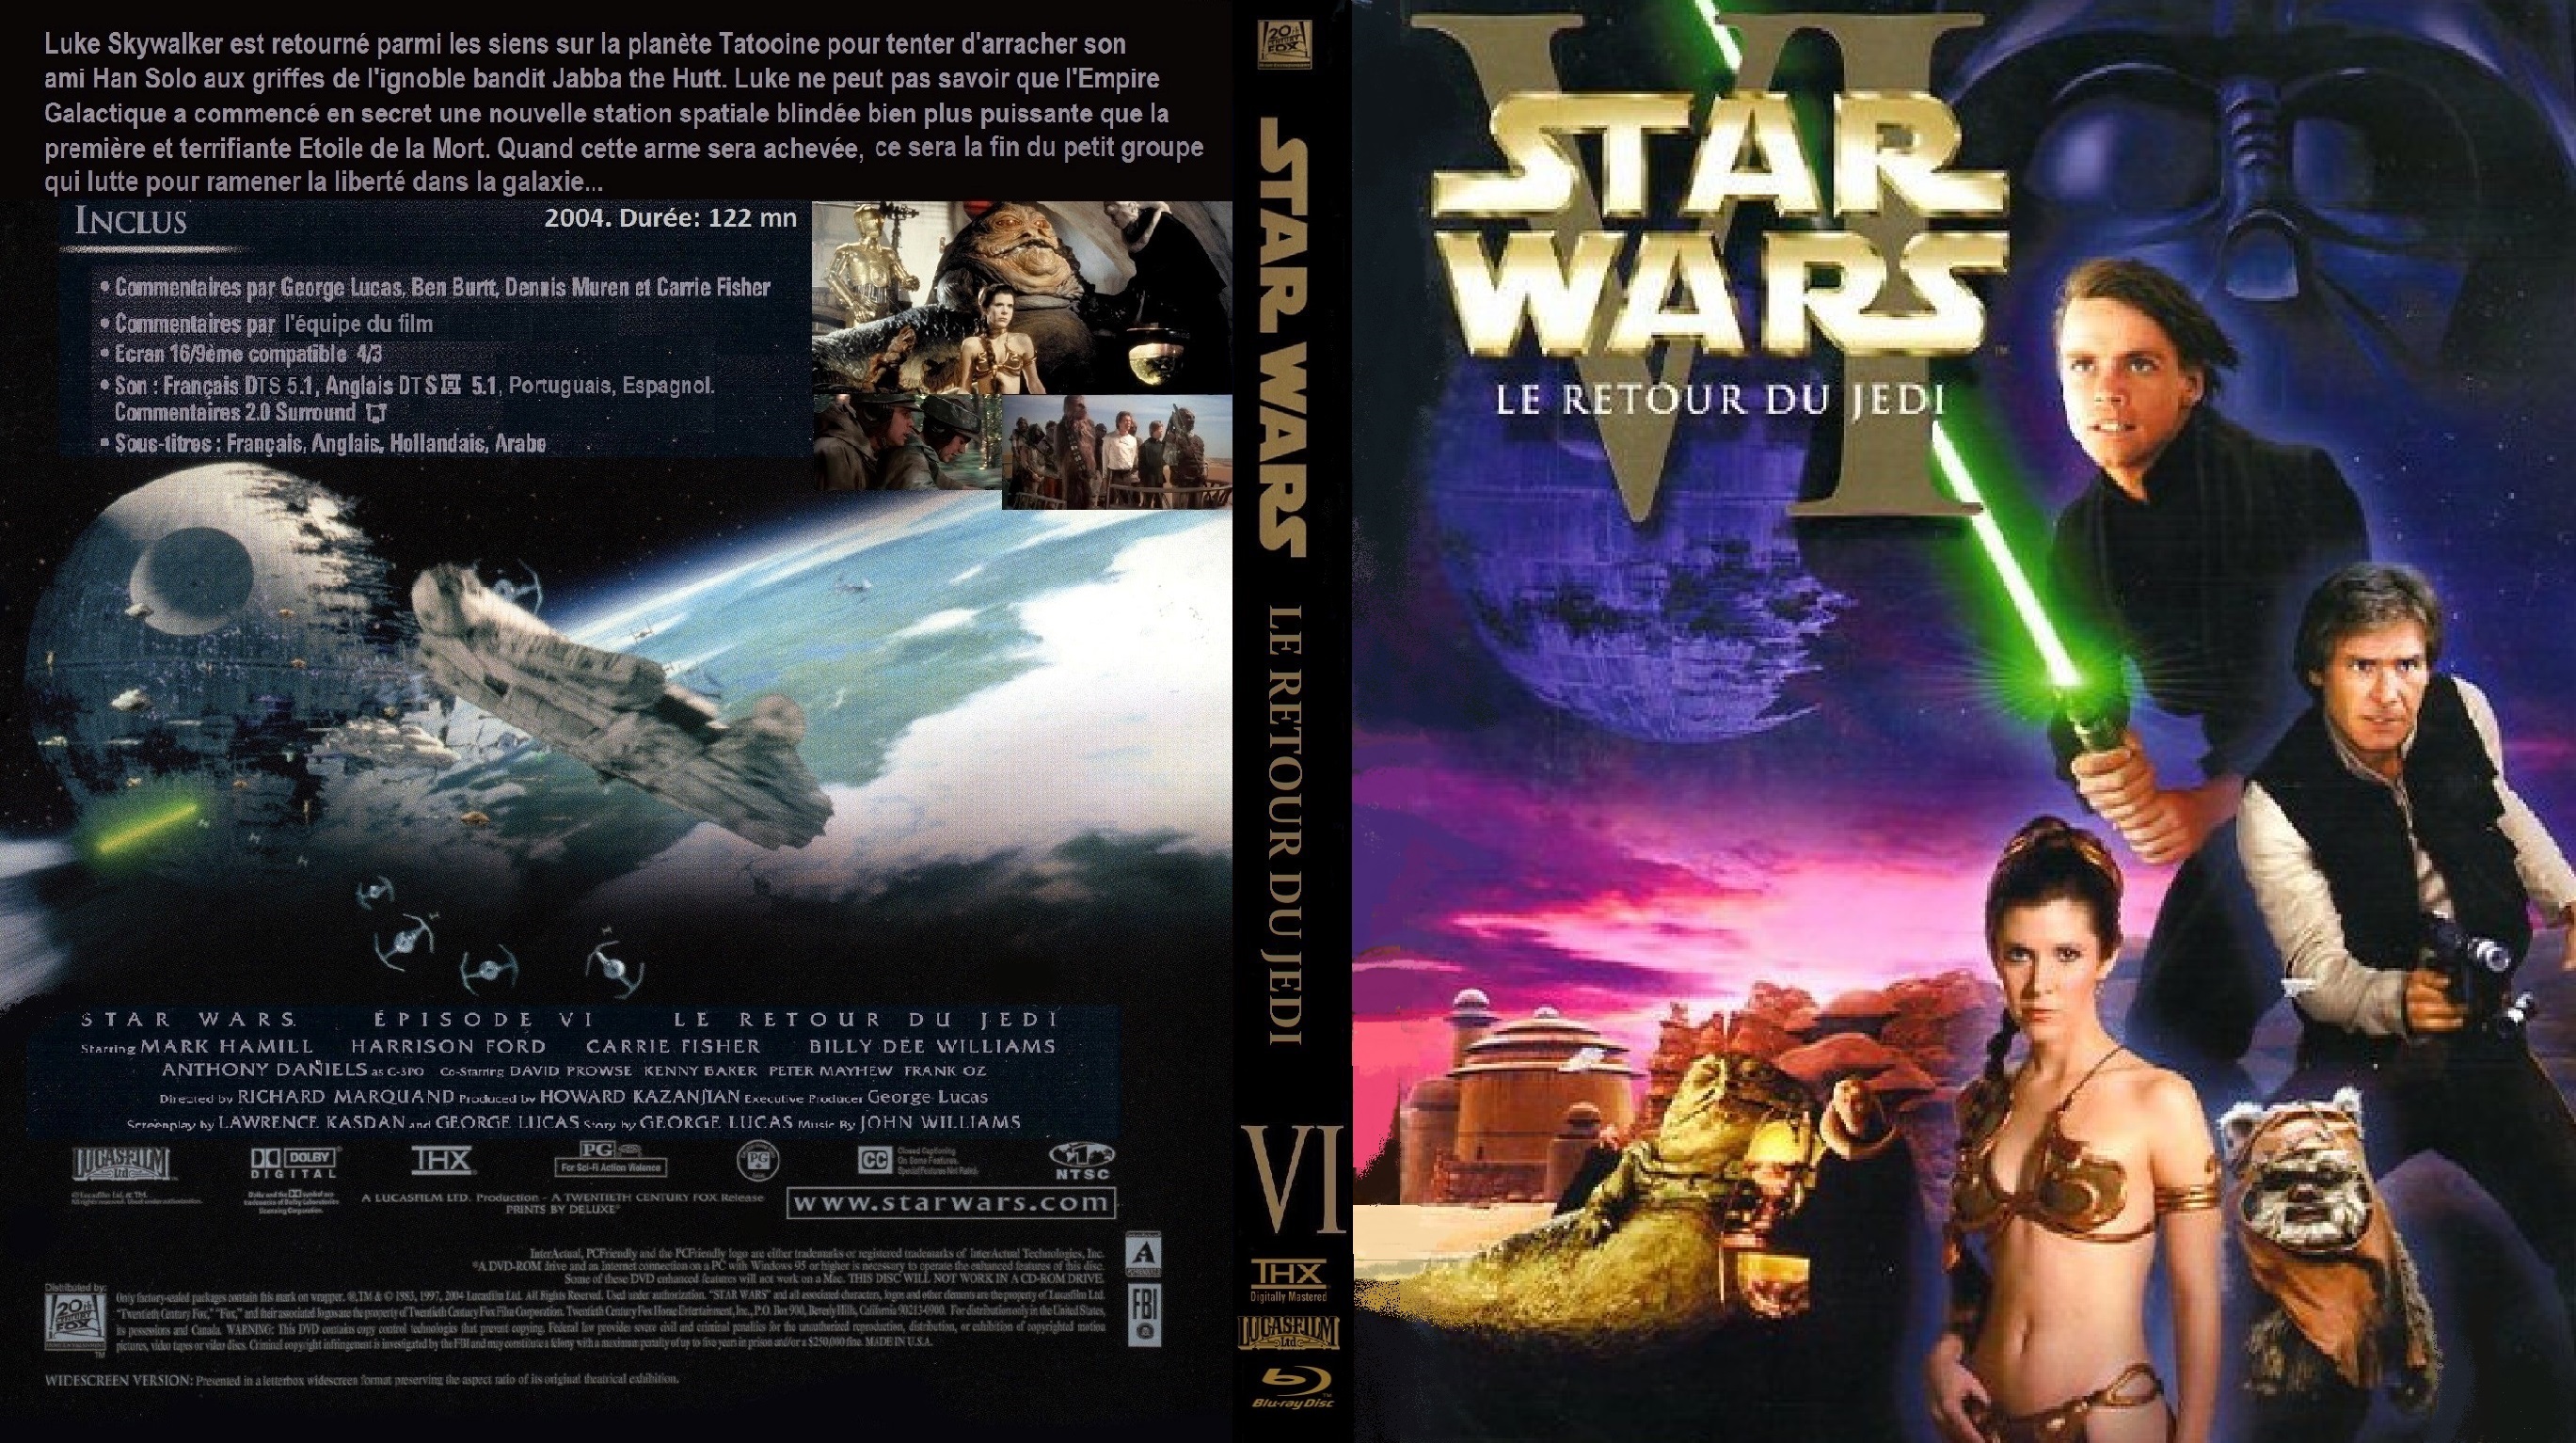 Jaquette DVD Star Wars Le retour du jedi custom (BLU-RAY)